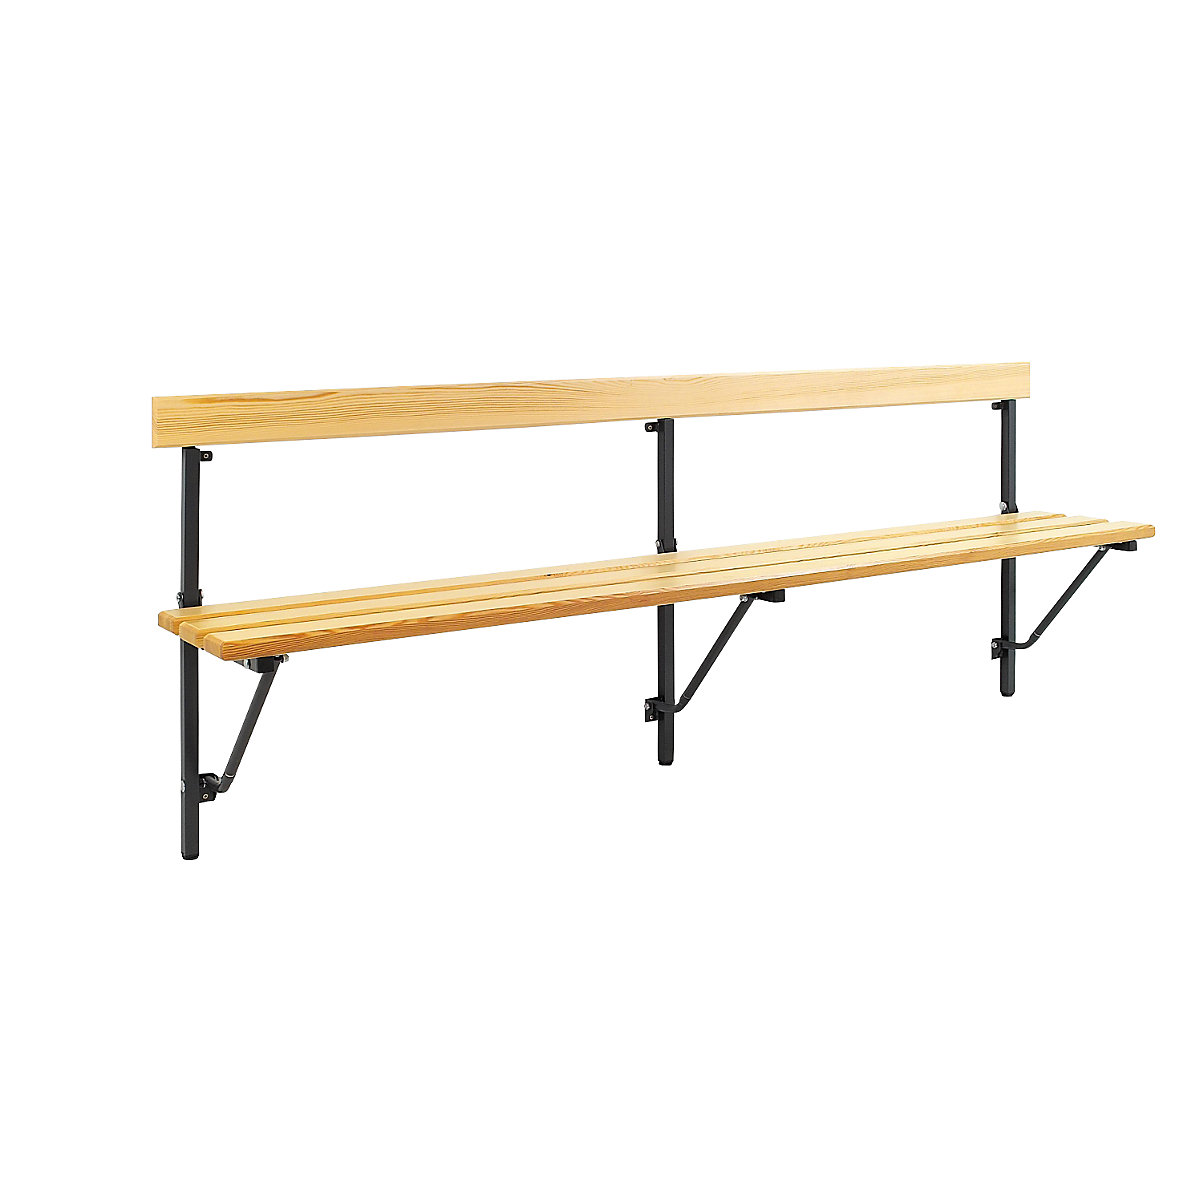 Folding wall-mounted bench - Sypro